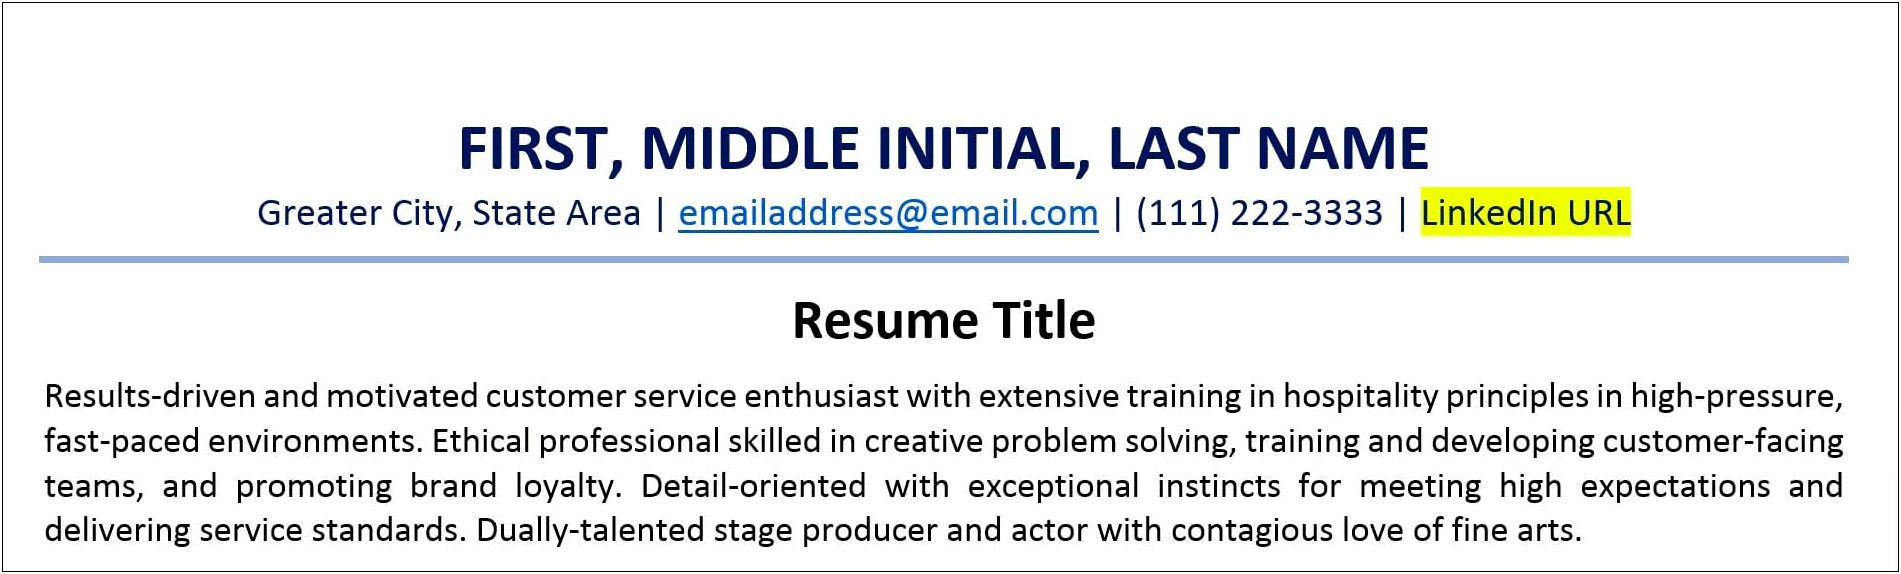 Resume With Linkedin Url Example